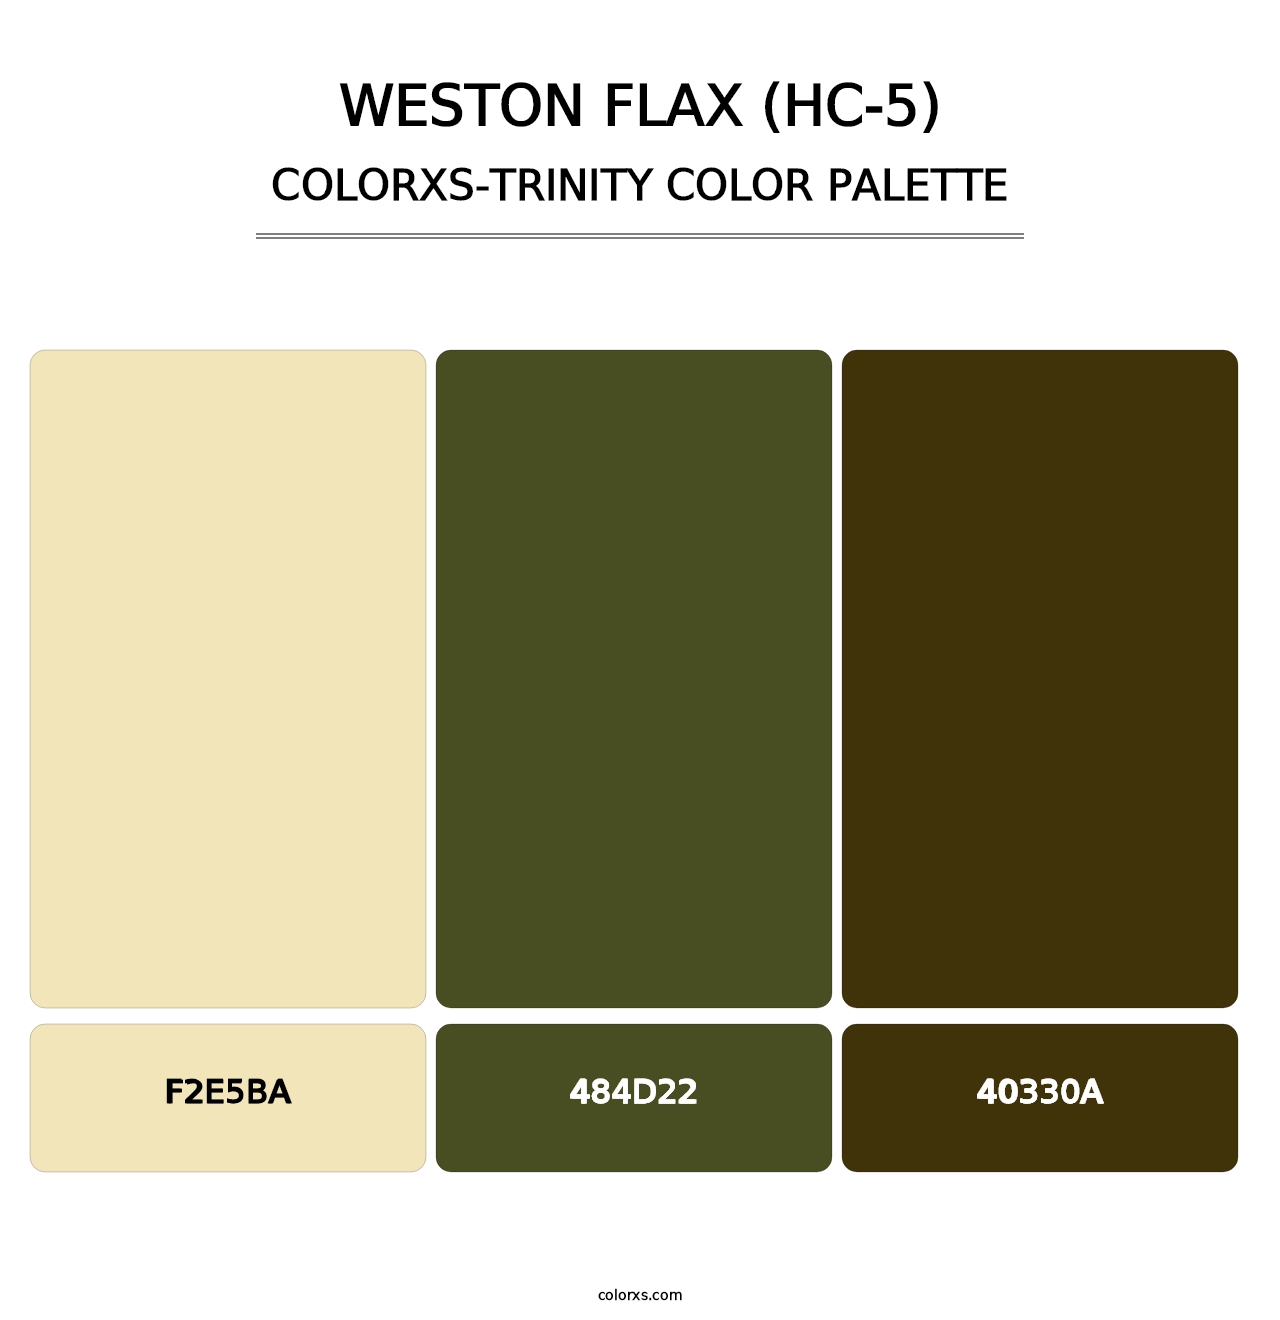 Weston Flax (HC-5) - Colorxs Trinity Palette